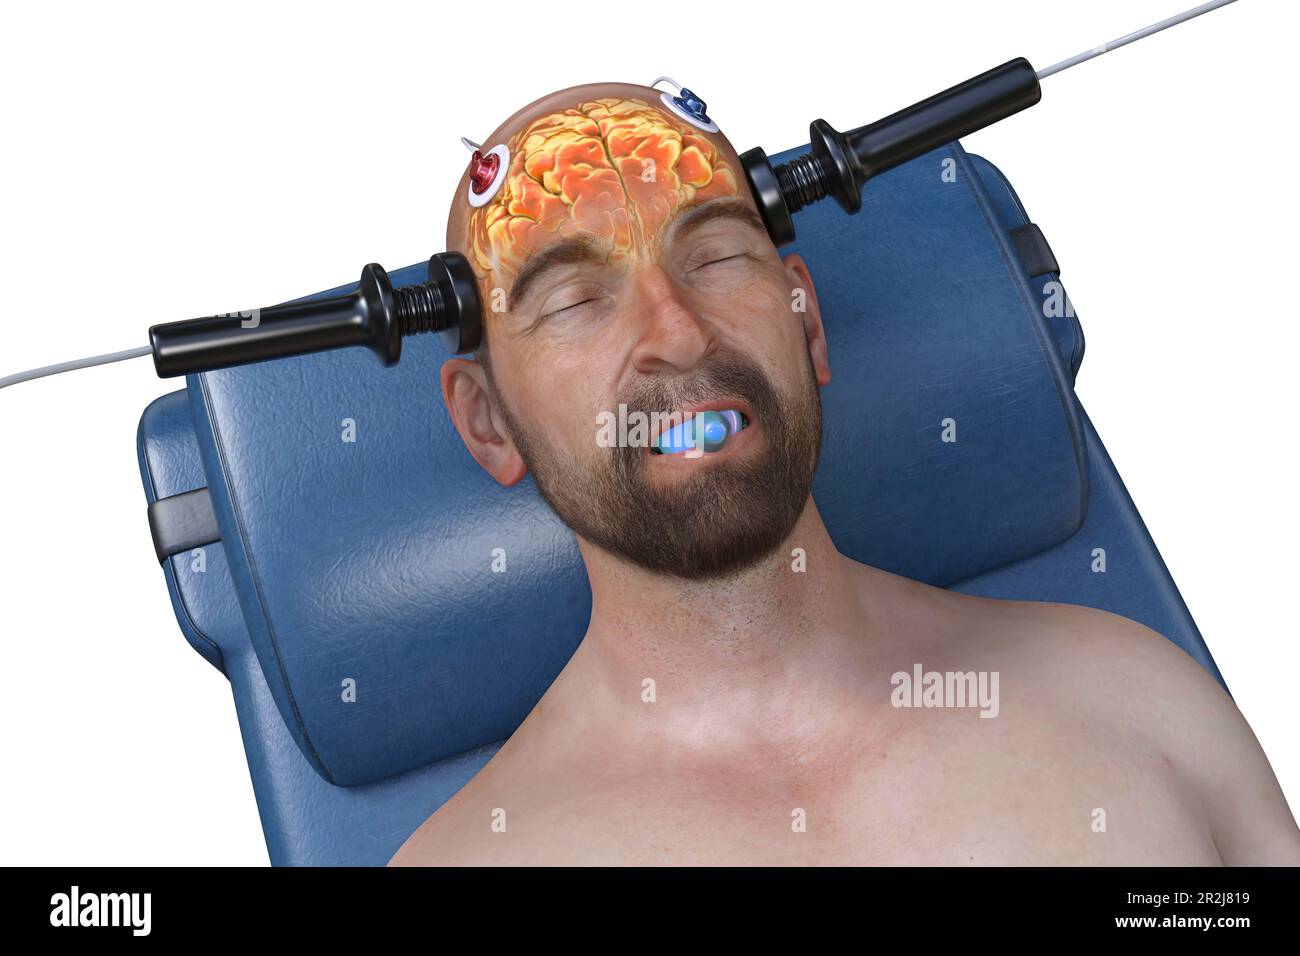 Electroconvulsive therapy, illustration Stock Photo